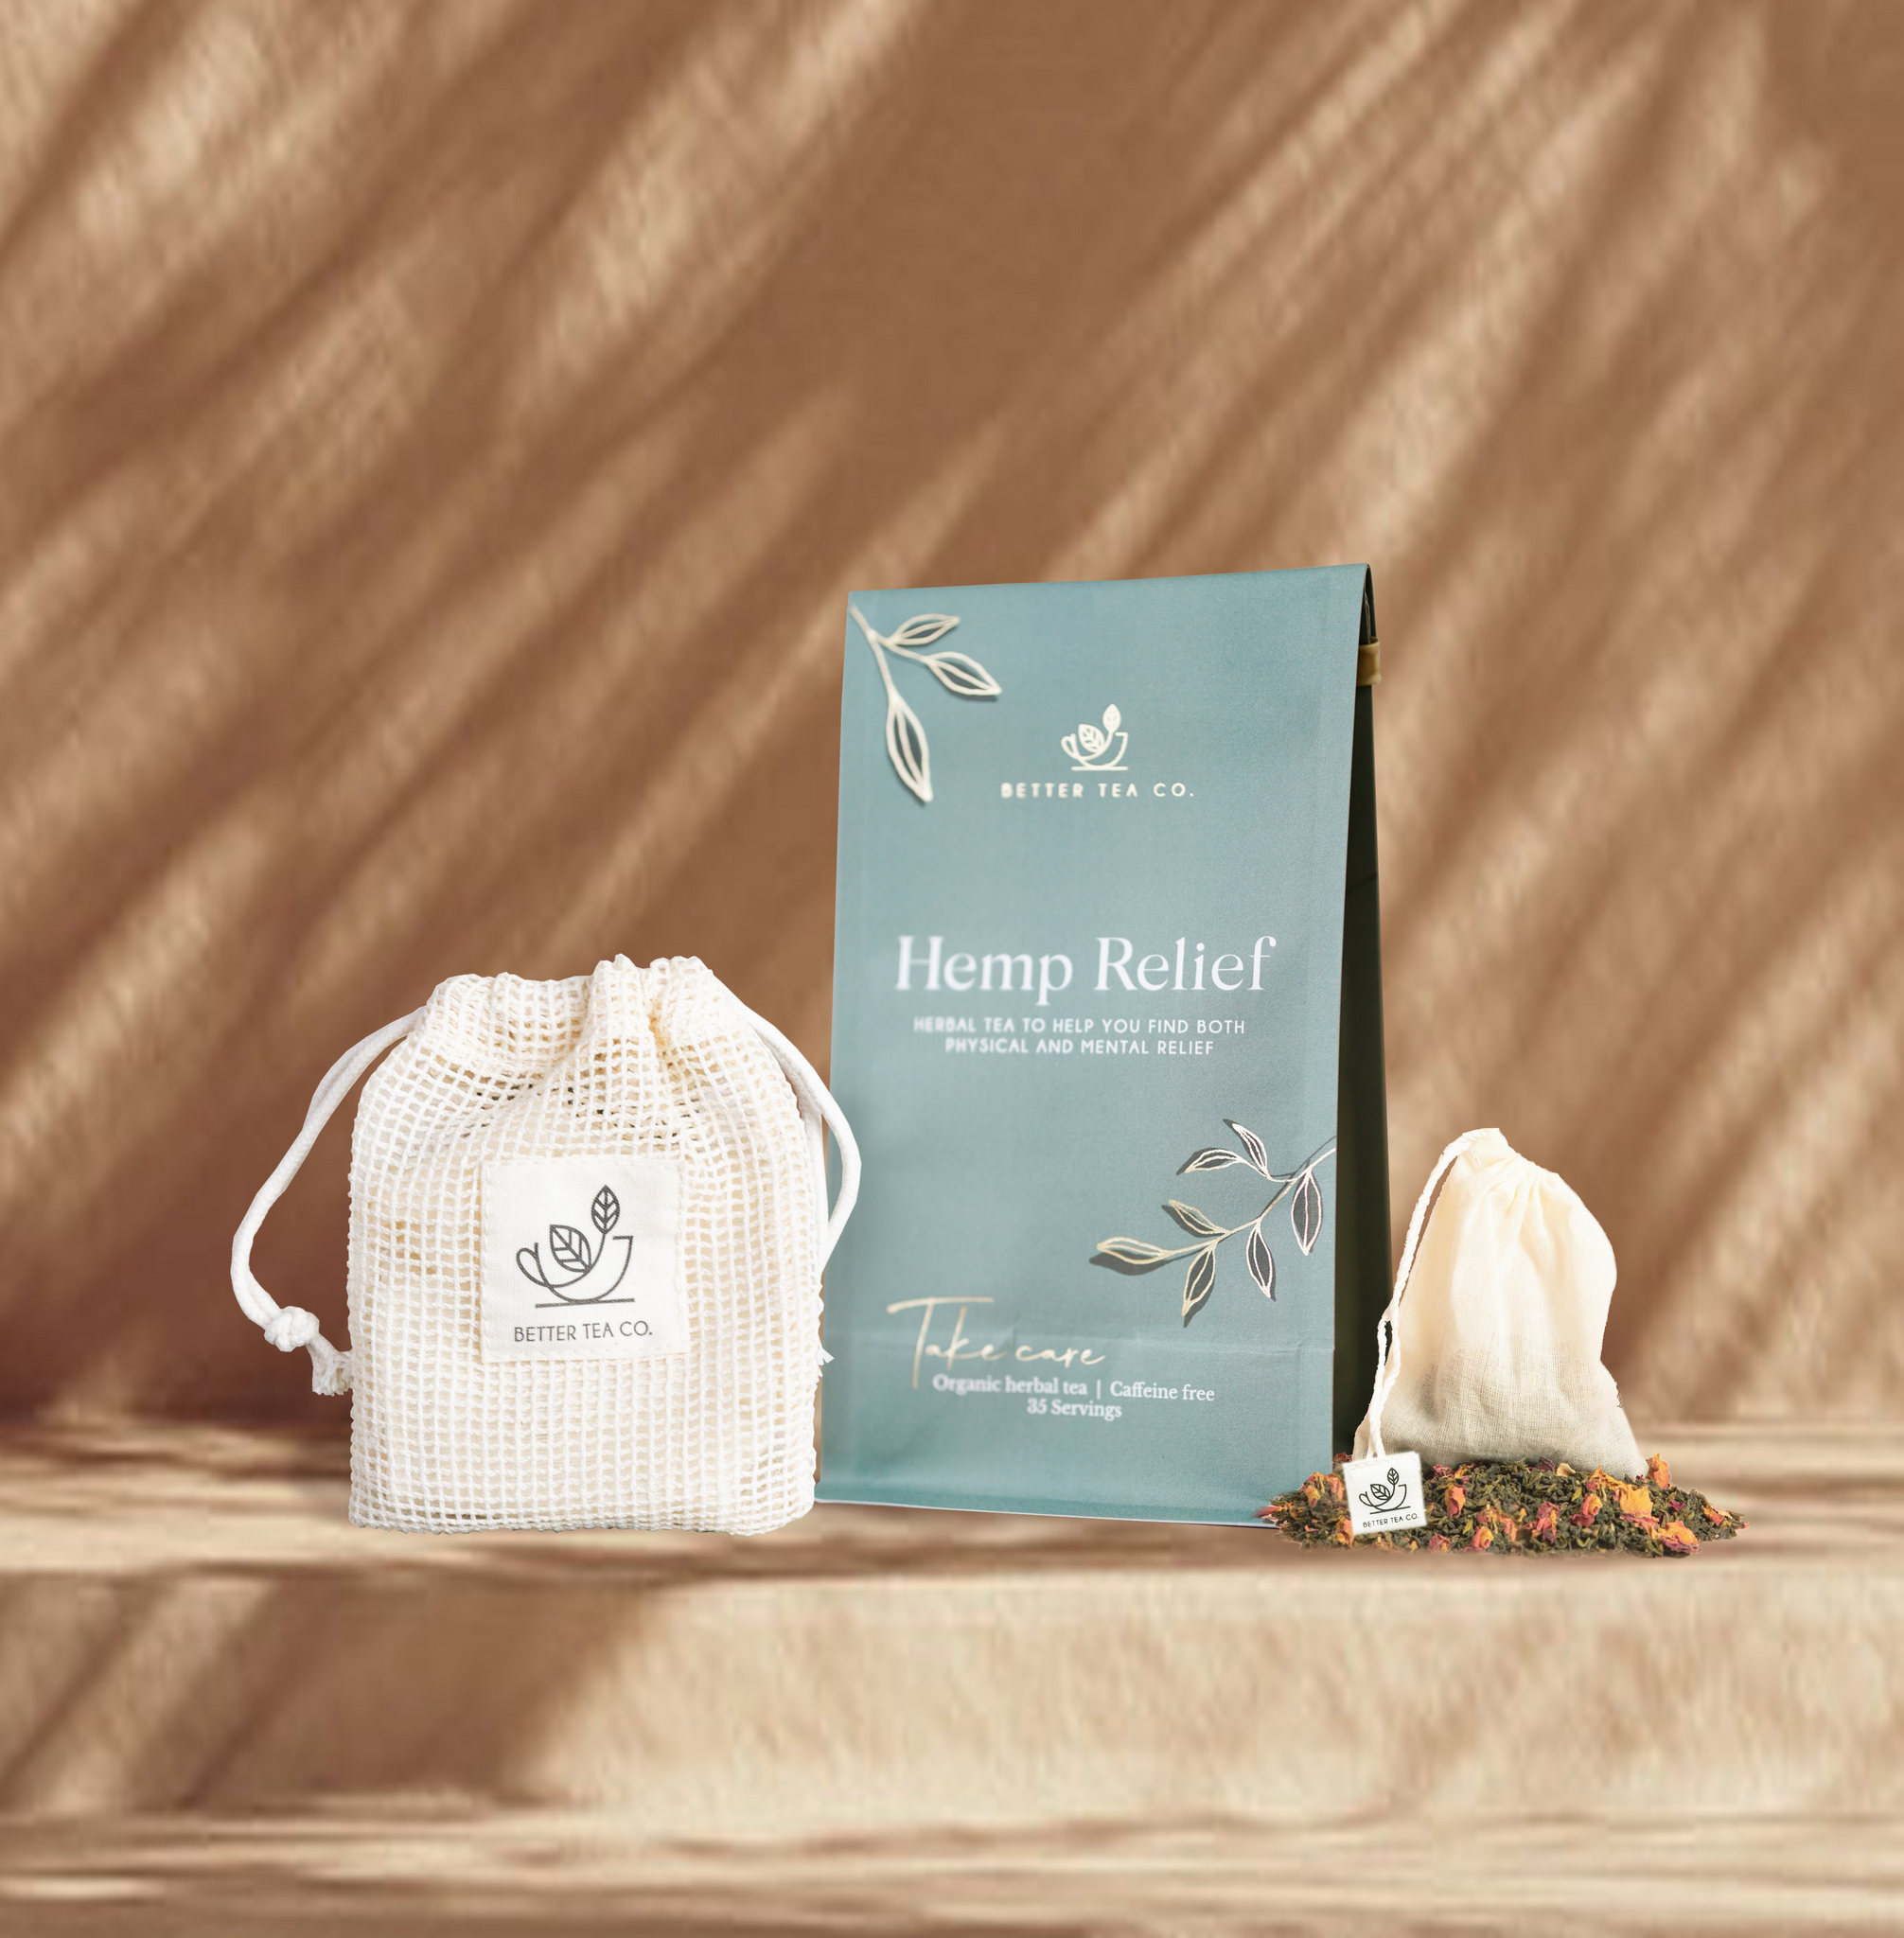  TrexTea Blended Herbal Tea - 1 Box of 60 Tea Bags